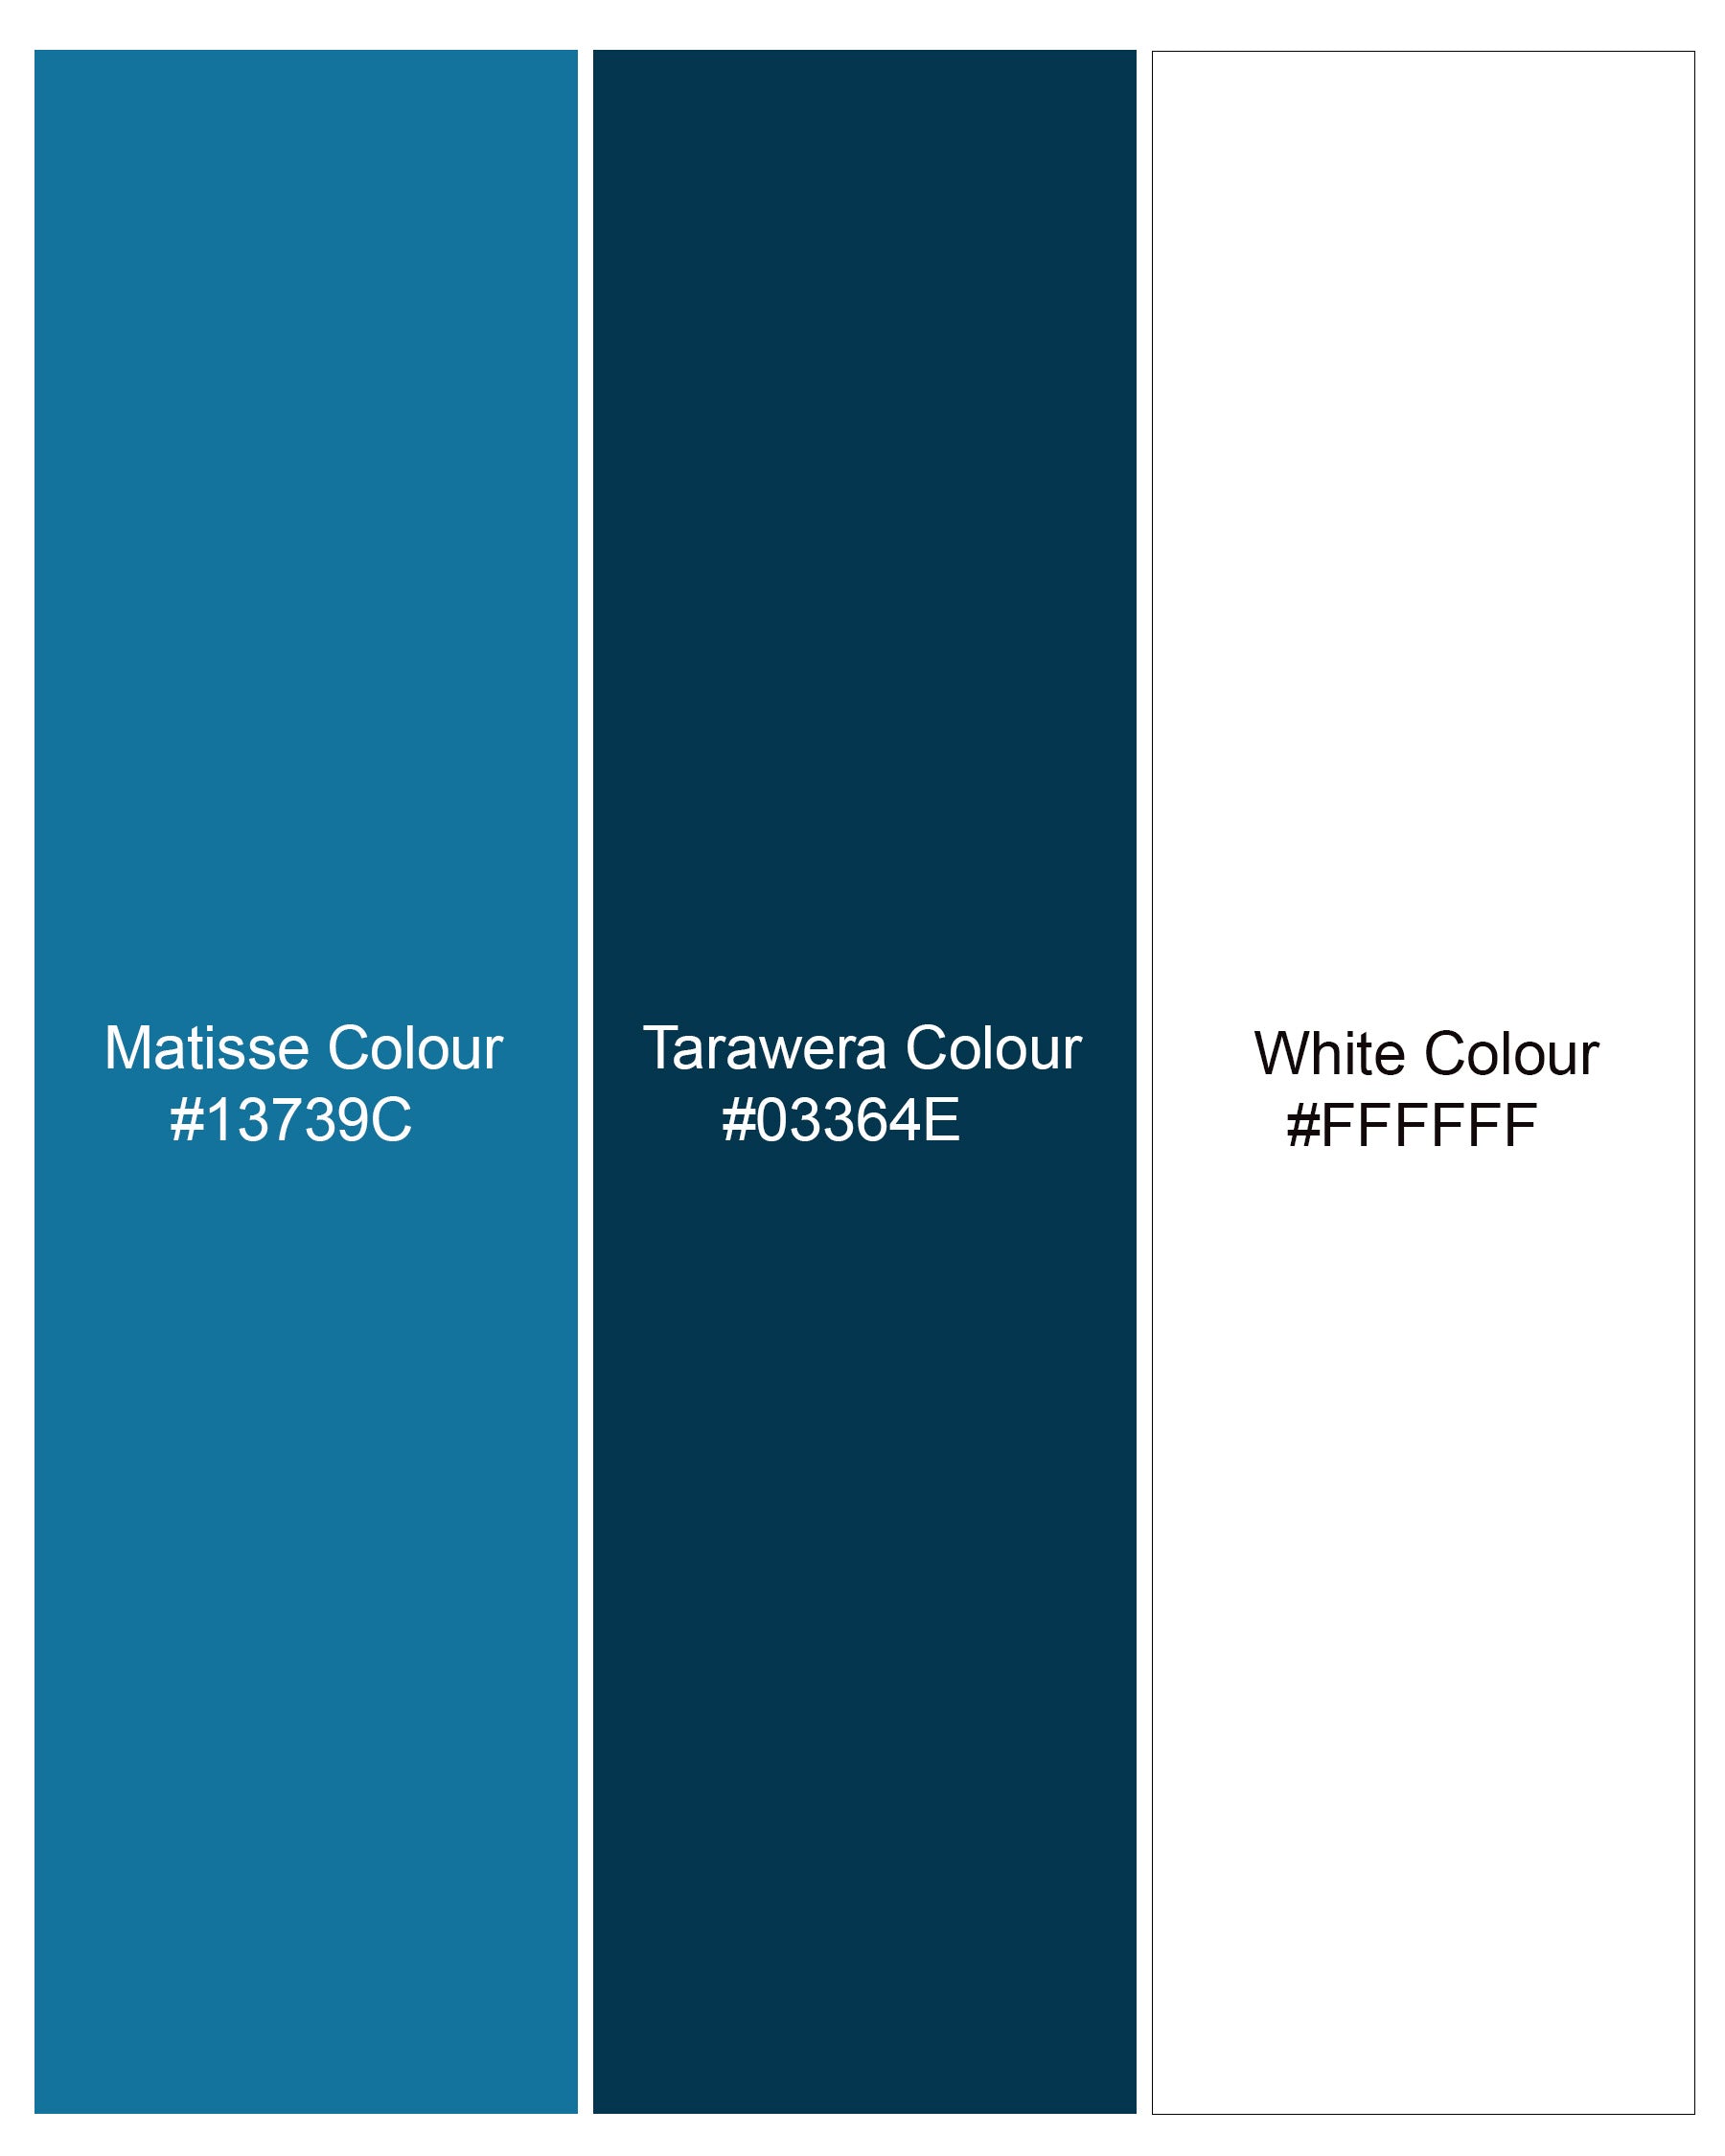 Matisse Blue with Bright White Plaid Dobby Textured Premium Giza Cotton Shirt 8125-38, 8125-H-38, 8125-39, 8125-H-39, 8125-40, 8125-H-40, 8125-42, 8125-H-42, 8125-44, 8125-H-44, 8125-46, 8125-H-46, 8125-48, 8125-H-48, 8125-50, 8125-H-50, 8125-52, 8125-H-52